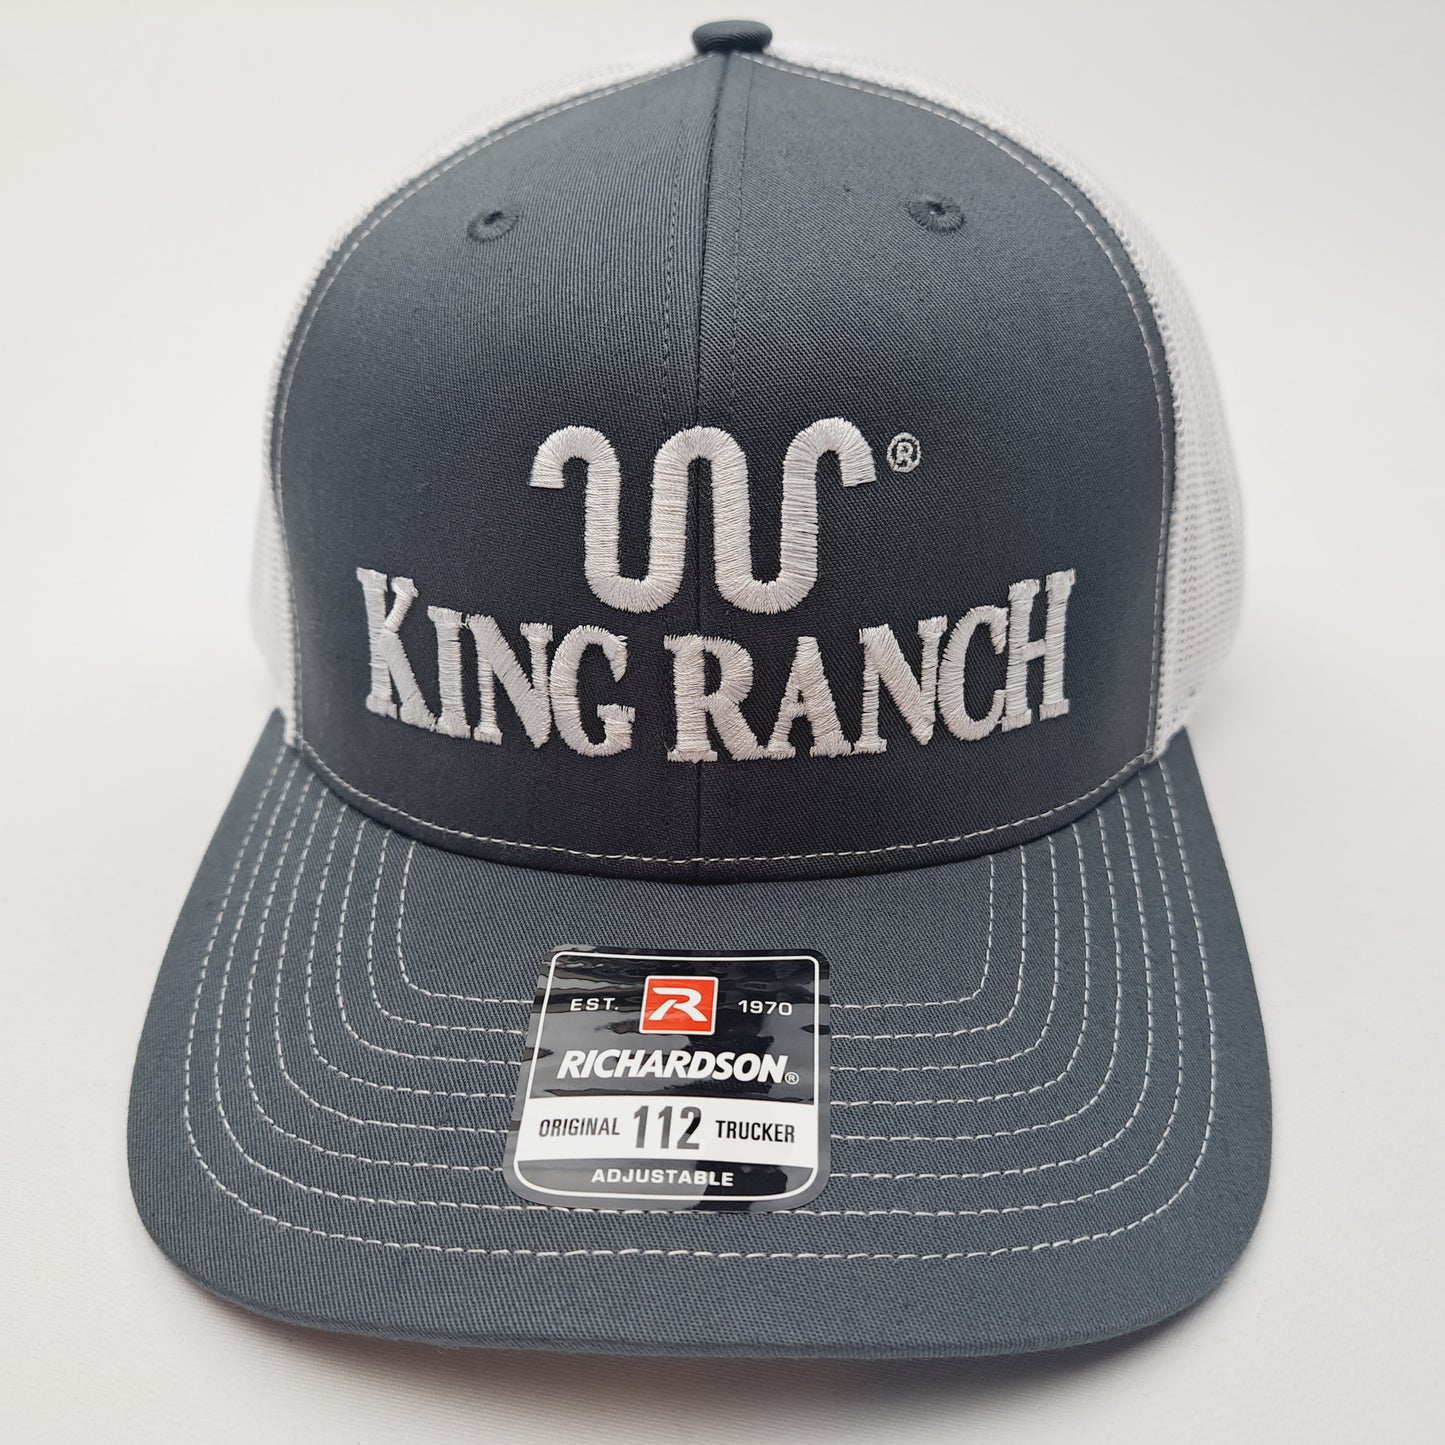 King Ranch Richardson 112 Mesh Trucker Snapback Hat Cap Gray & White Embroidered